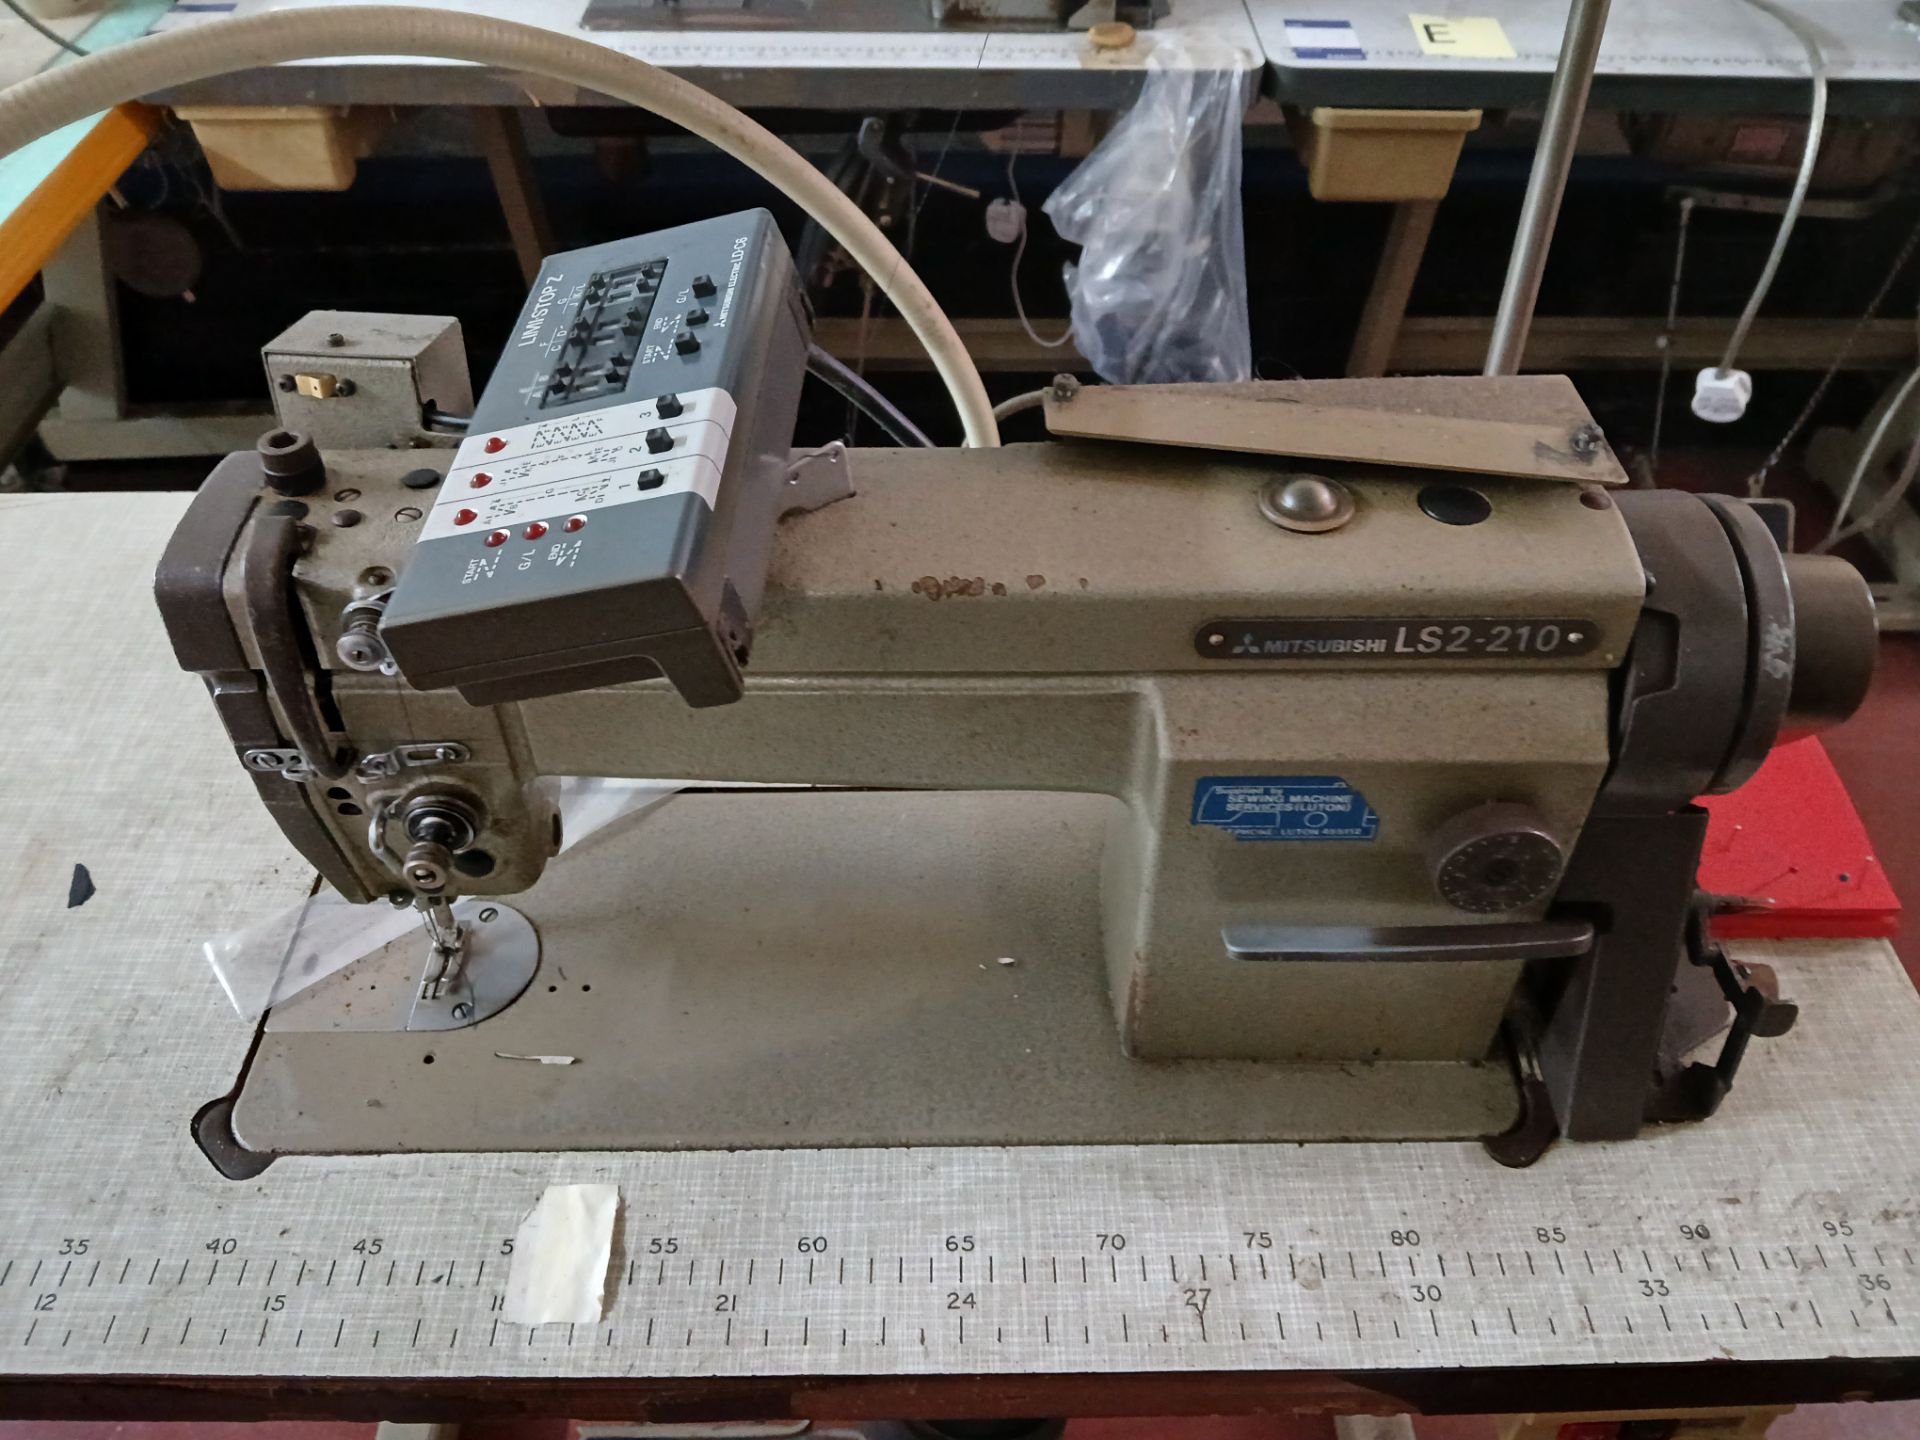 Mitsubishi LS2-210 sewing machine - Image 2 of 5